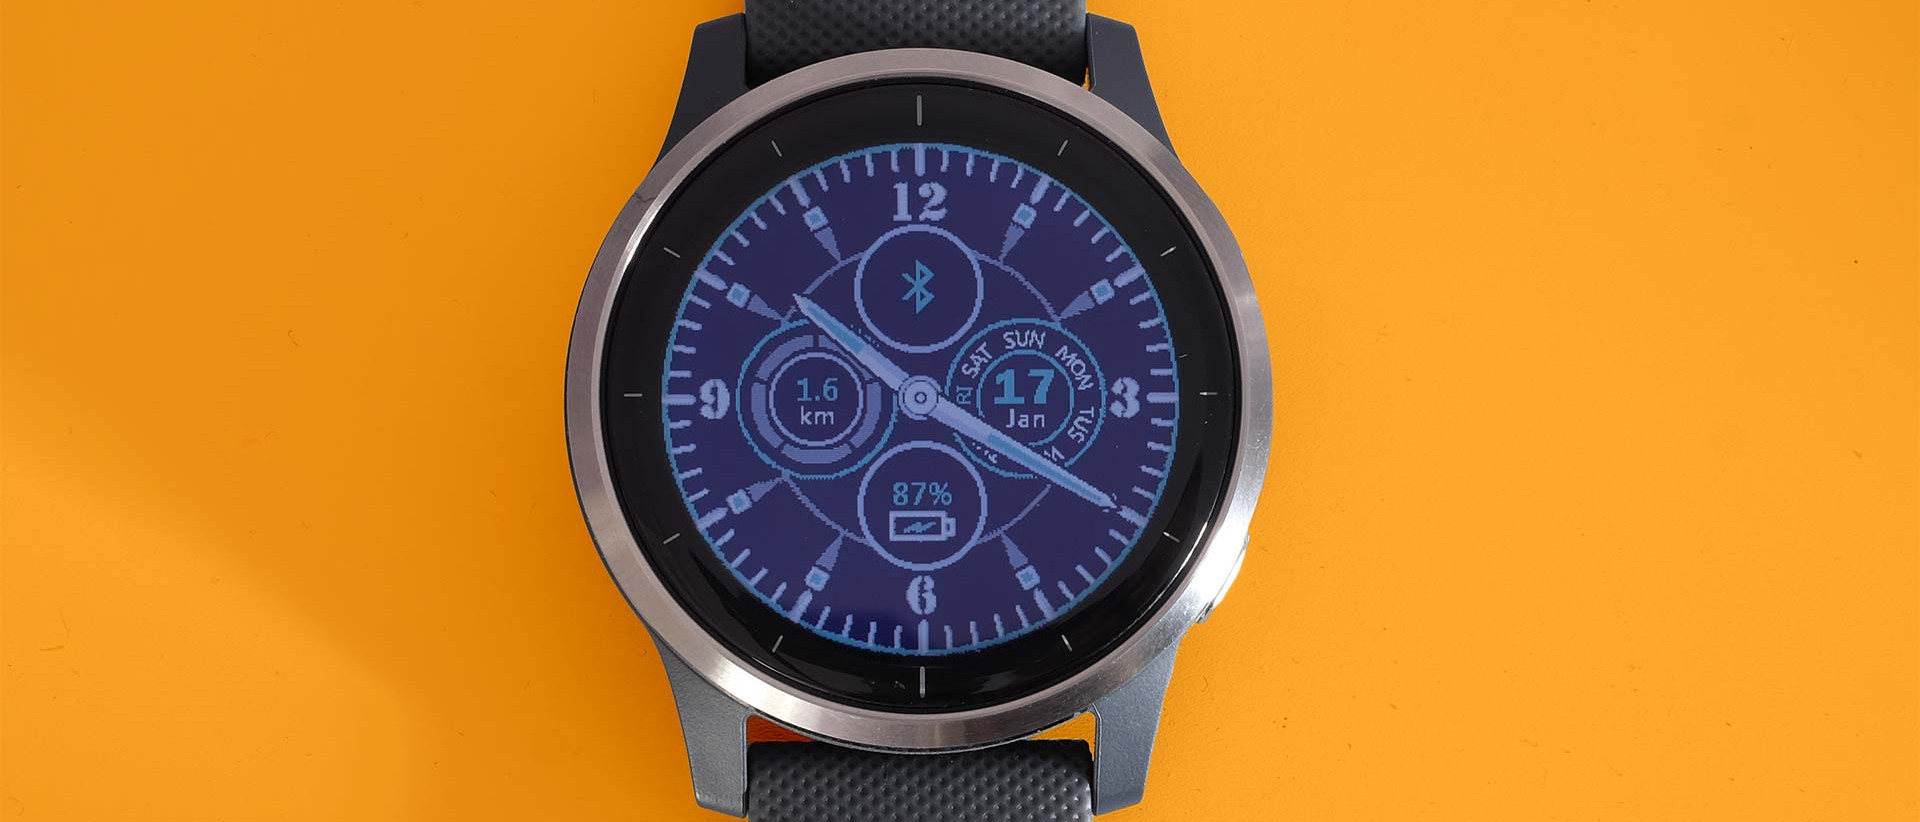 Garmin Vivoactive 4 Review: The Best Fitness Smartwatch Gets Better